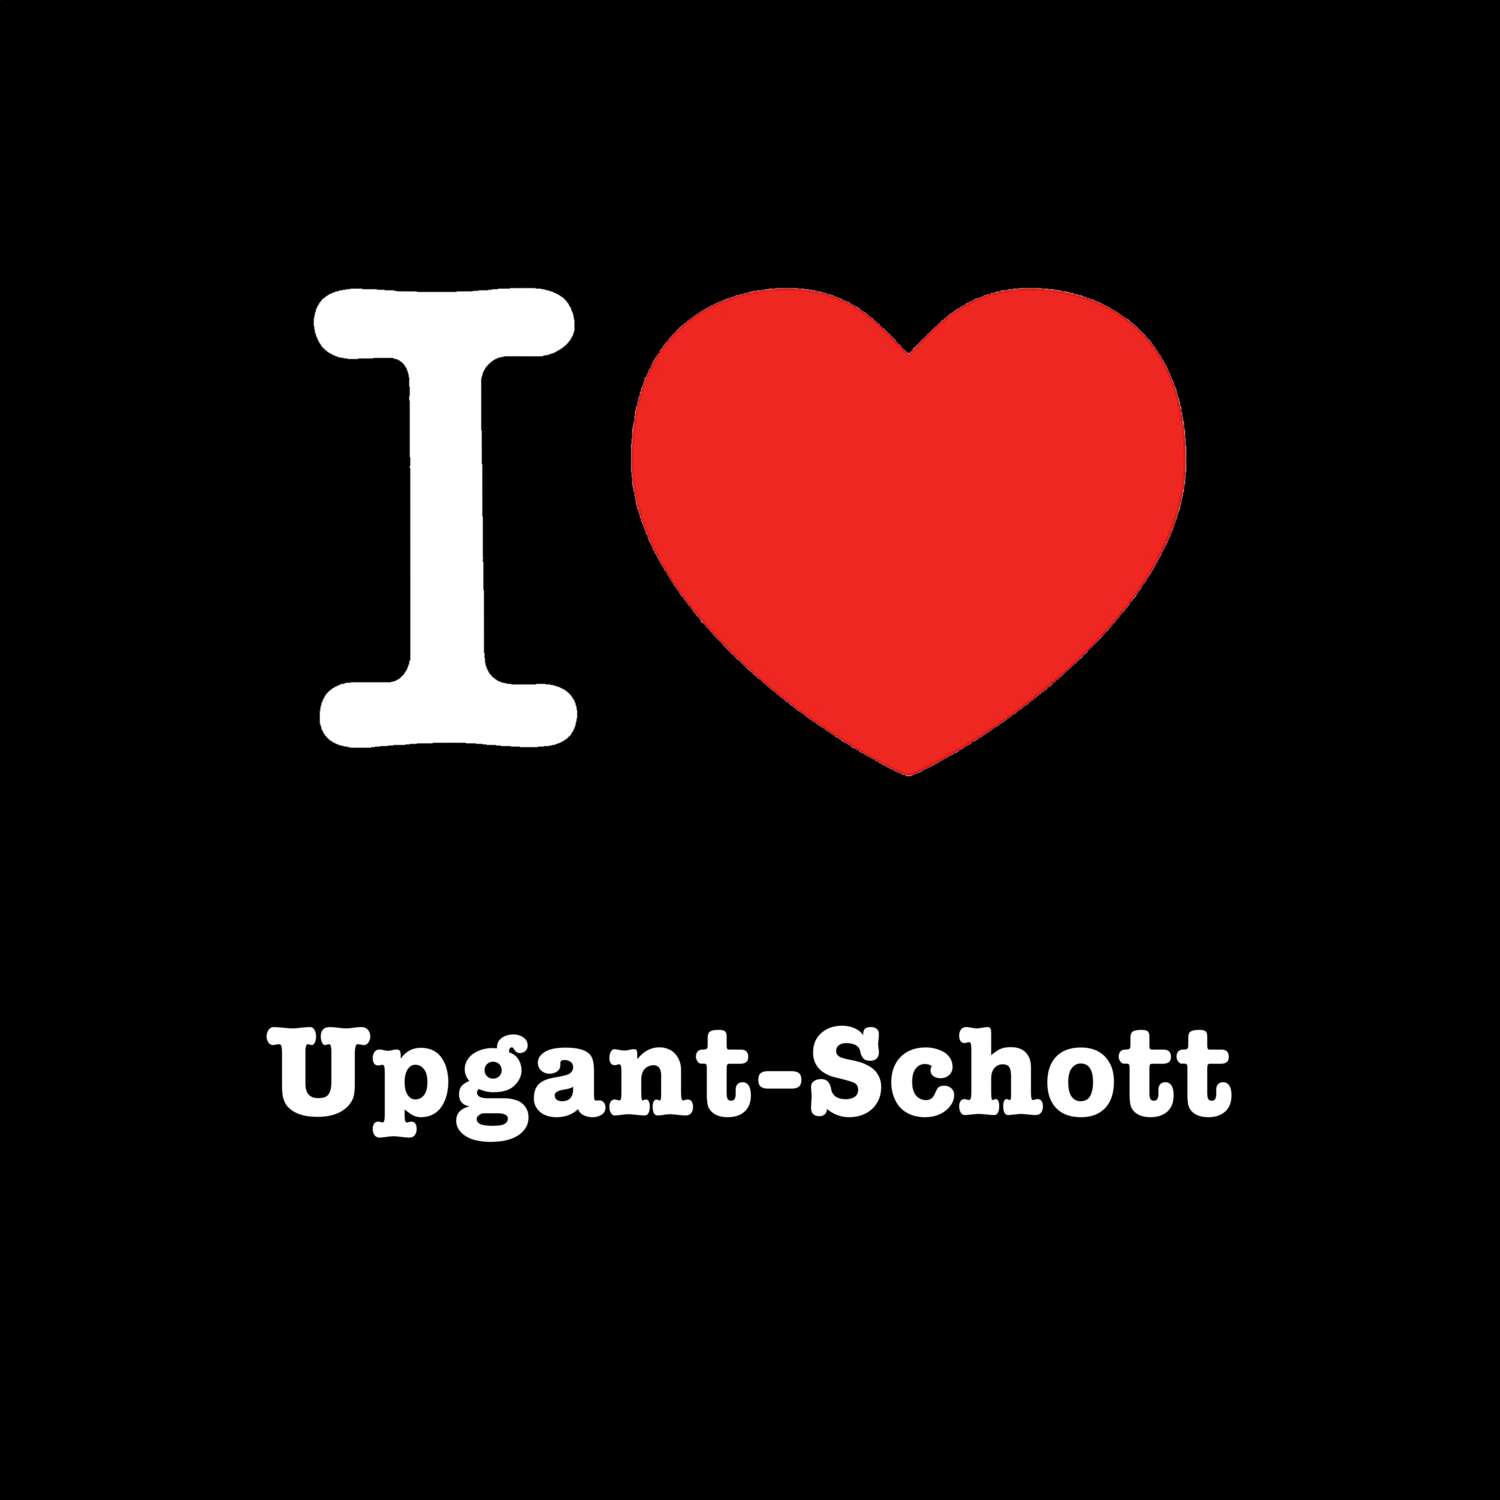 Upgant-Schott T-Shirt »I love«